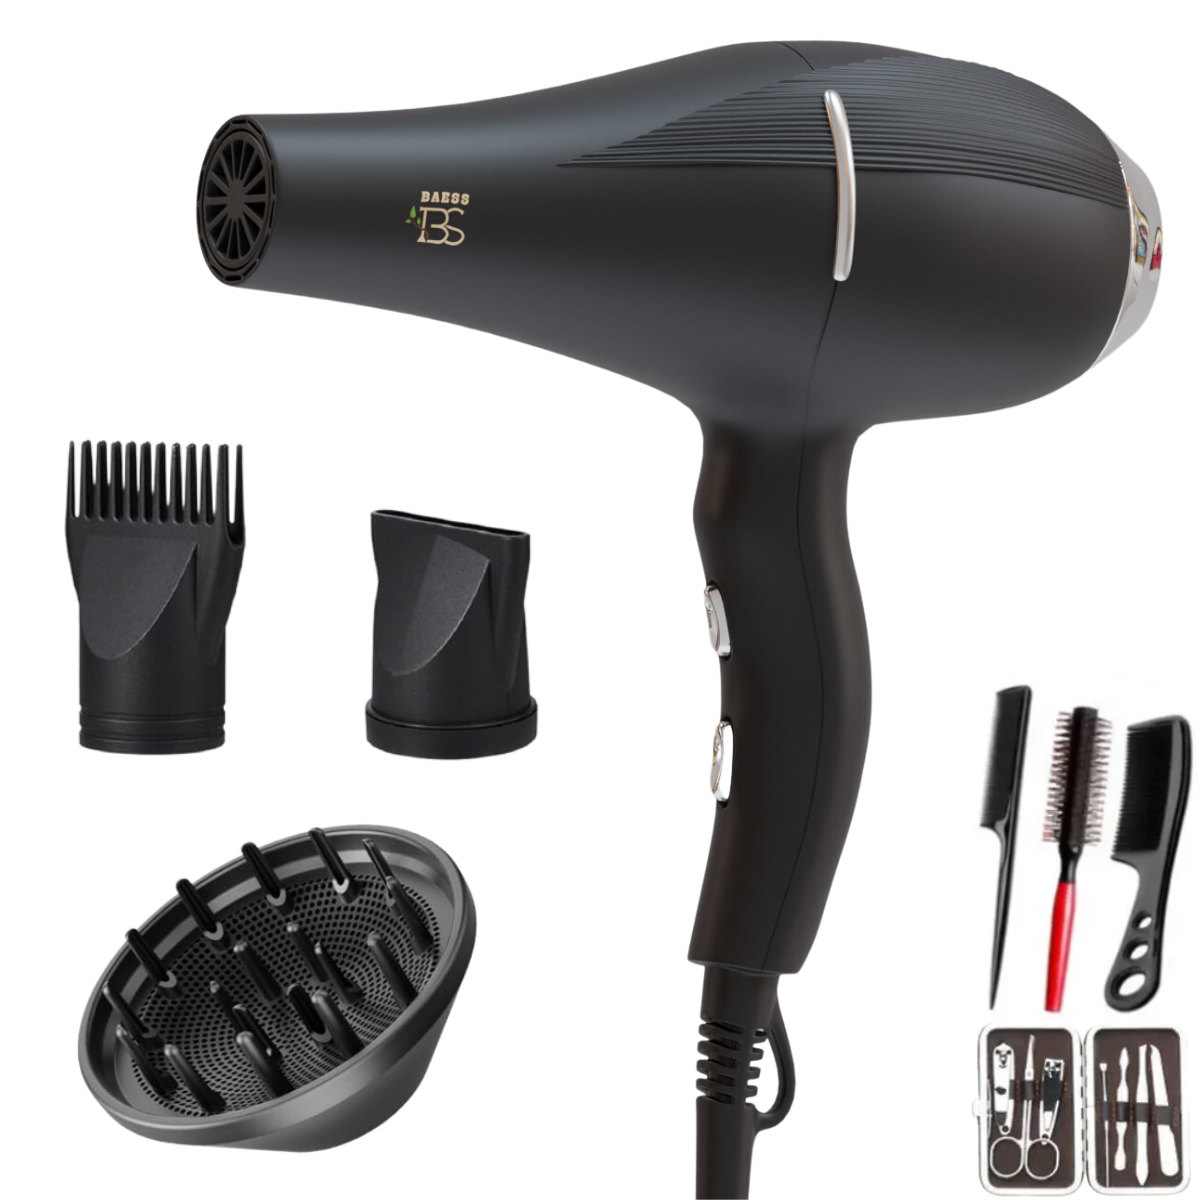 Hair dryer with Diffuser - Hair dryer - Travel hair dryer - Foldable - 1800W